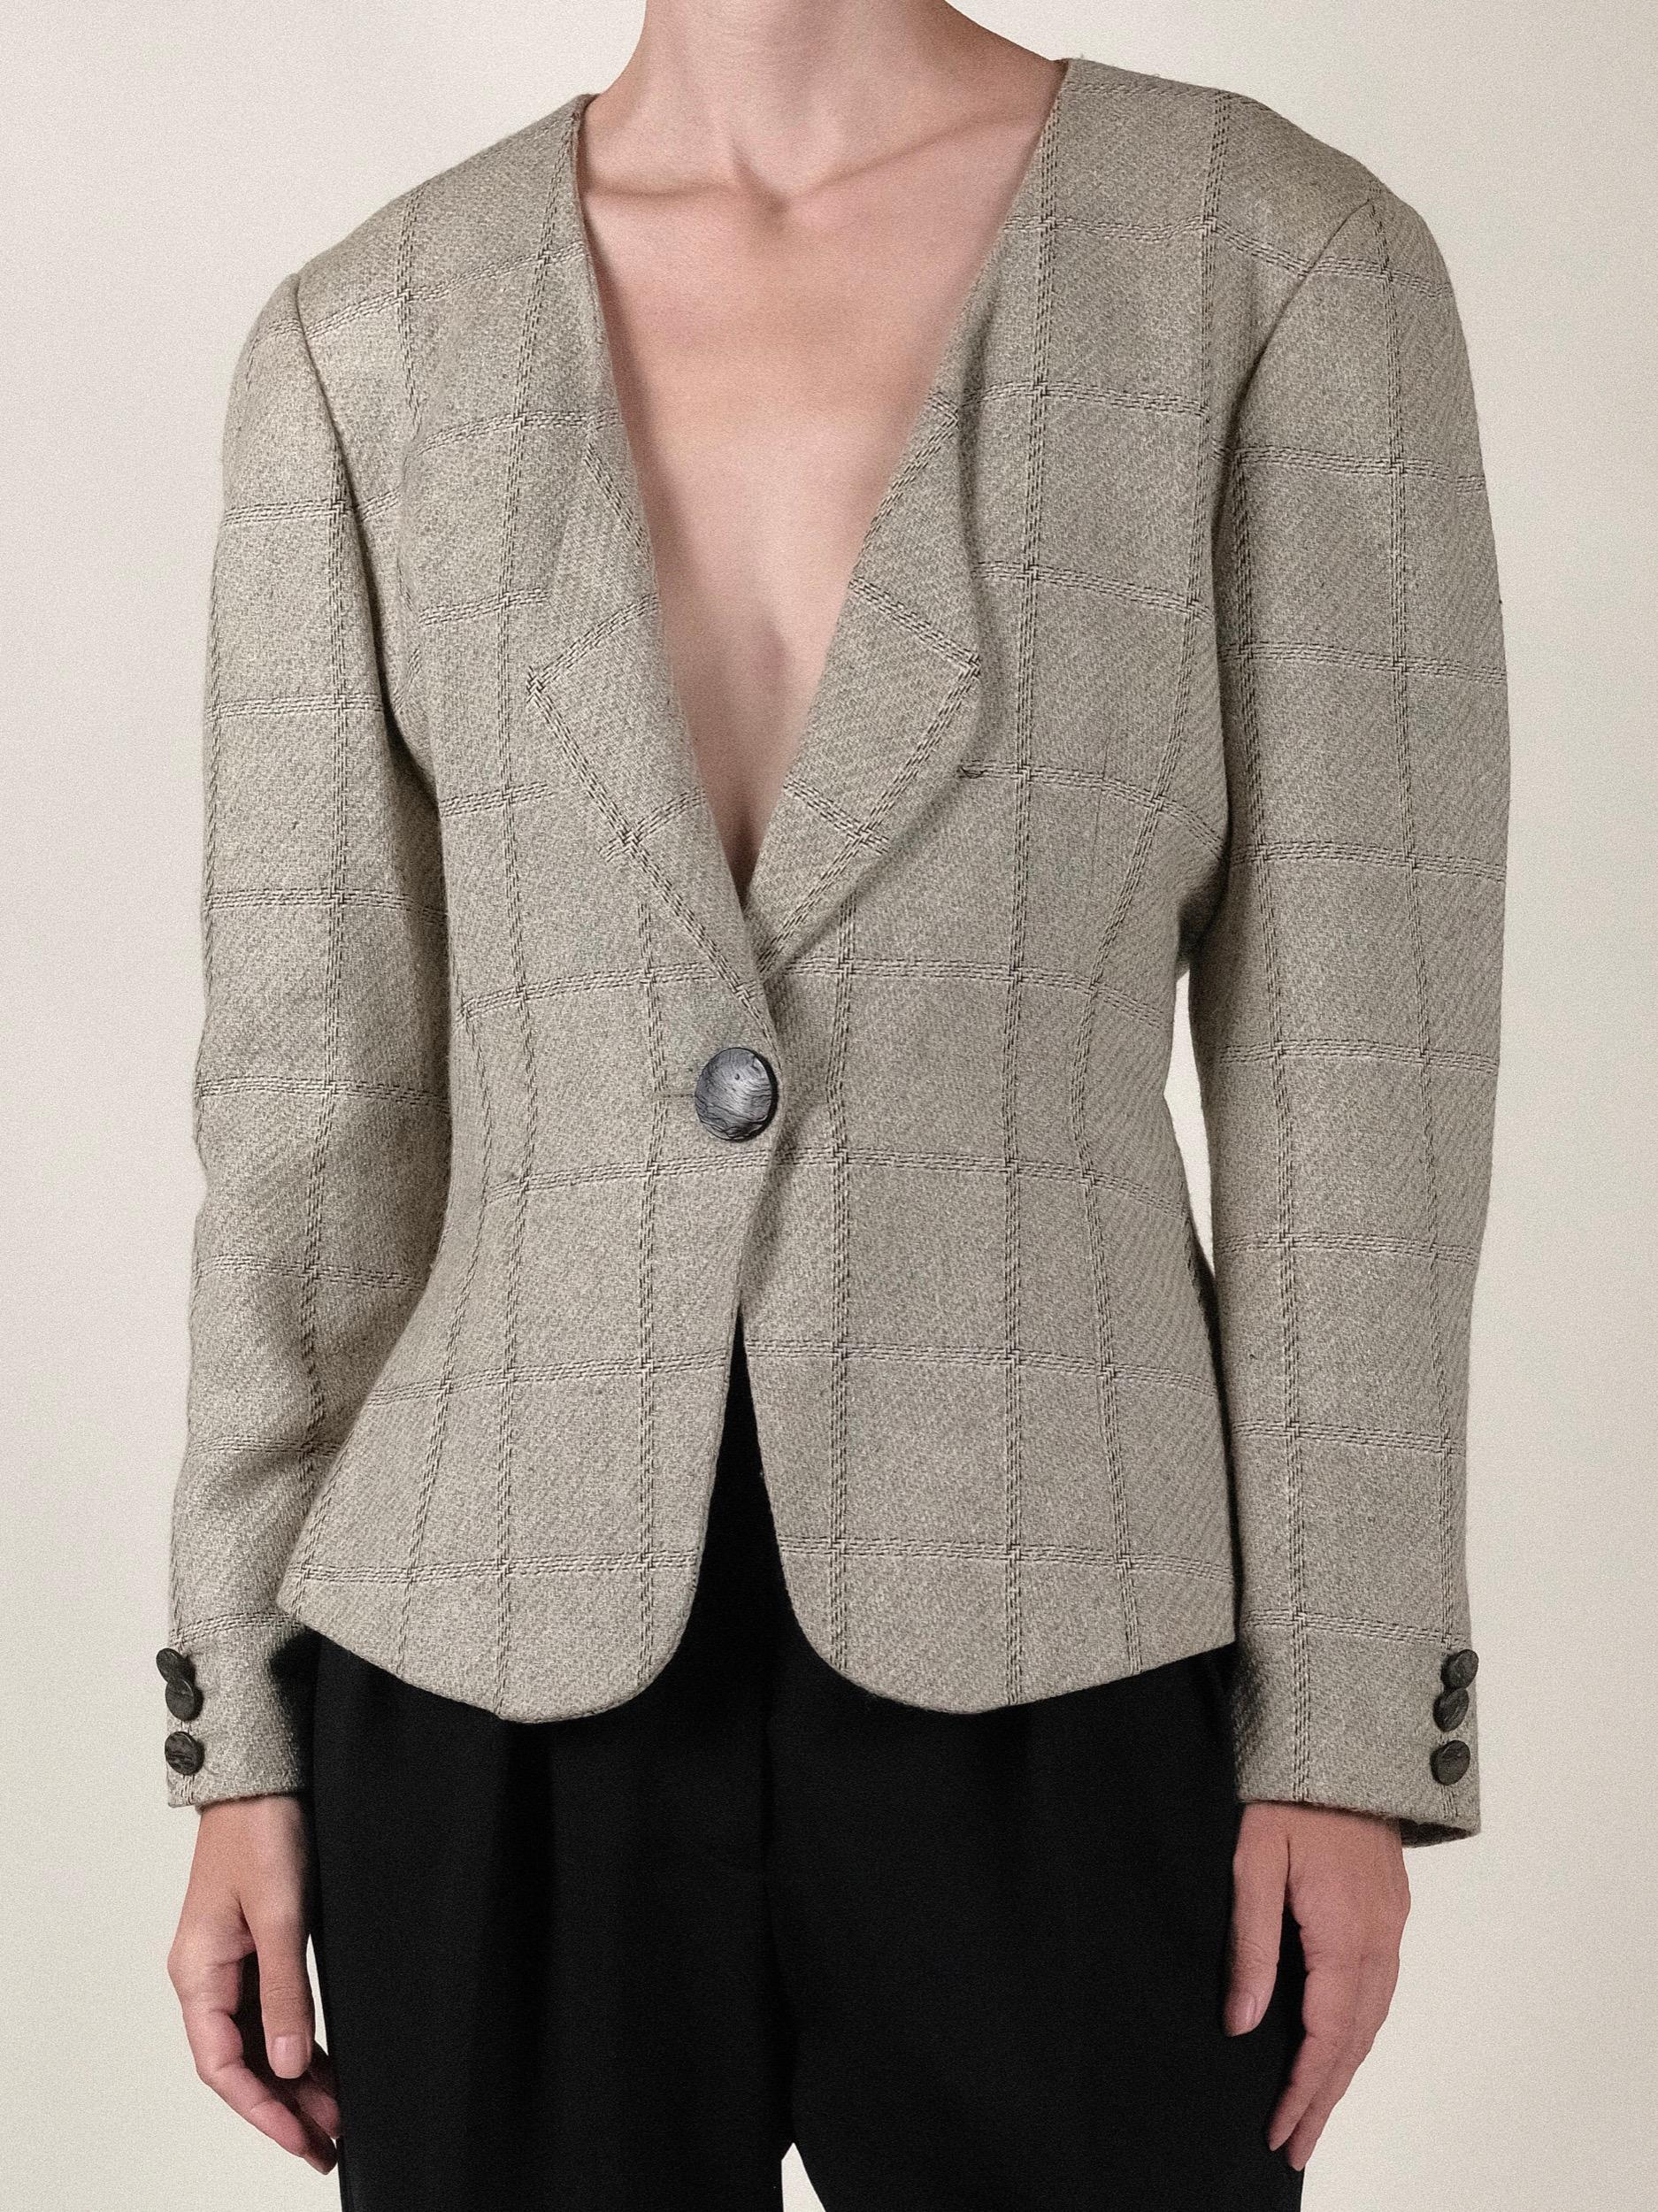 Gray Krizia Plaid Wool and Silk Jacket 1980's Sz 42 For Sale